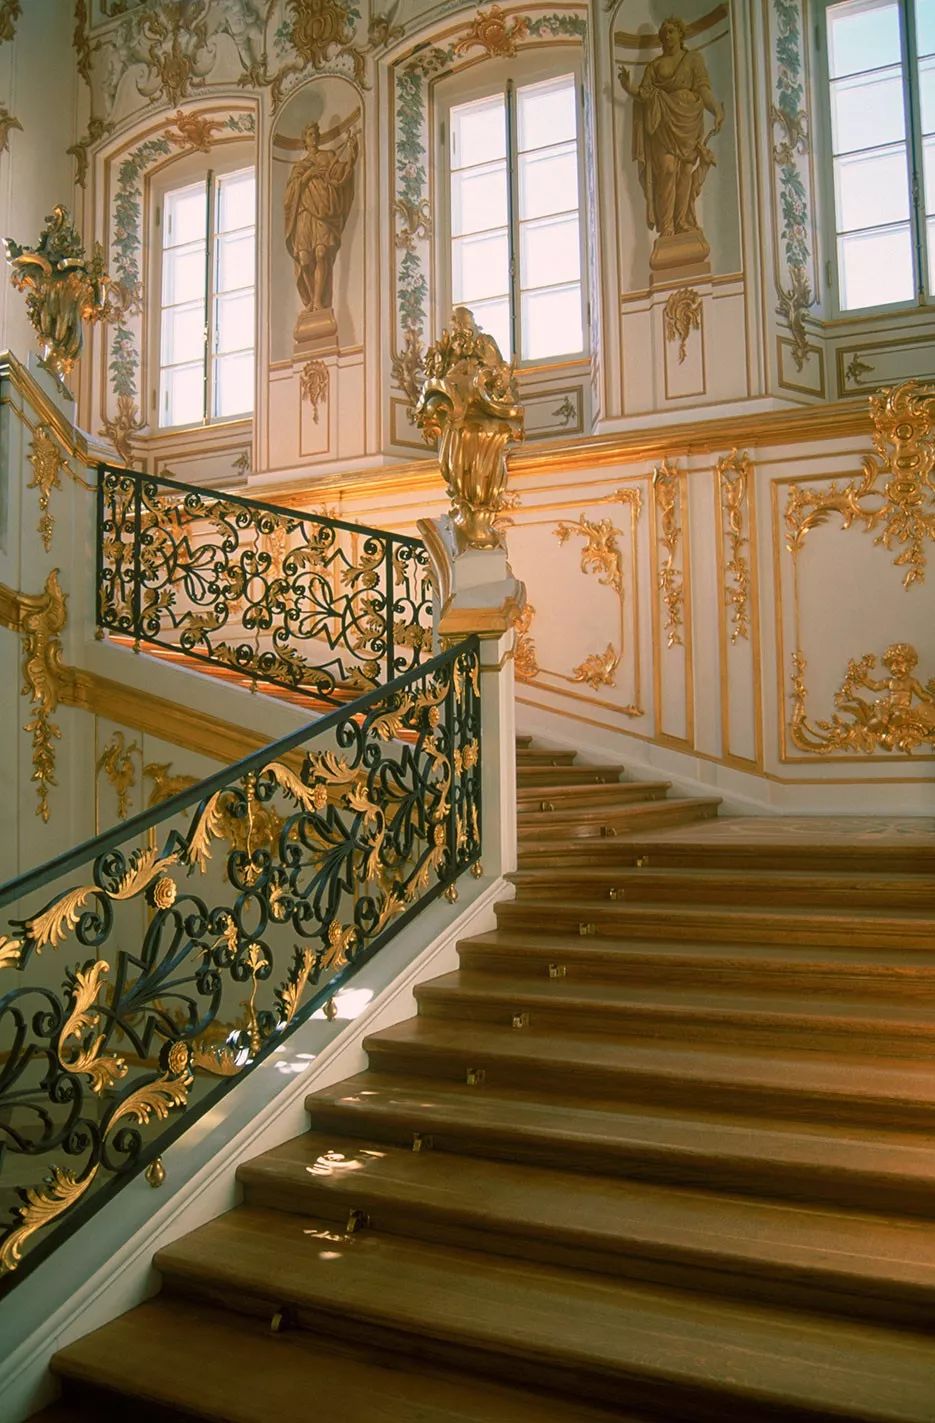 「Julia带你看设计(3)」——世界上最伟大的建筑系列 坐落在全球的宫殿建筑：德国的新天鹅堡，法国的凡尔赛宫，和中国的紫禁城